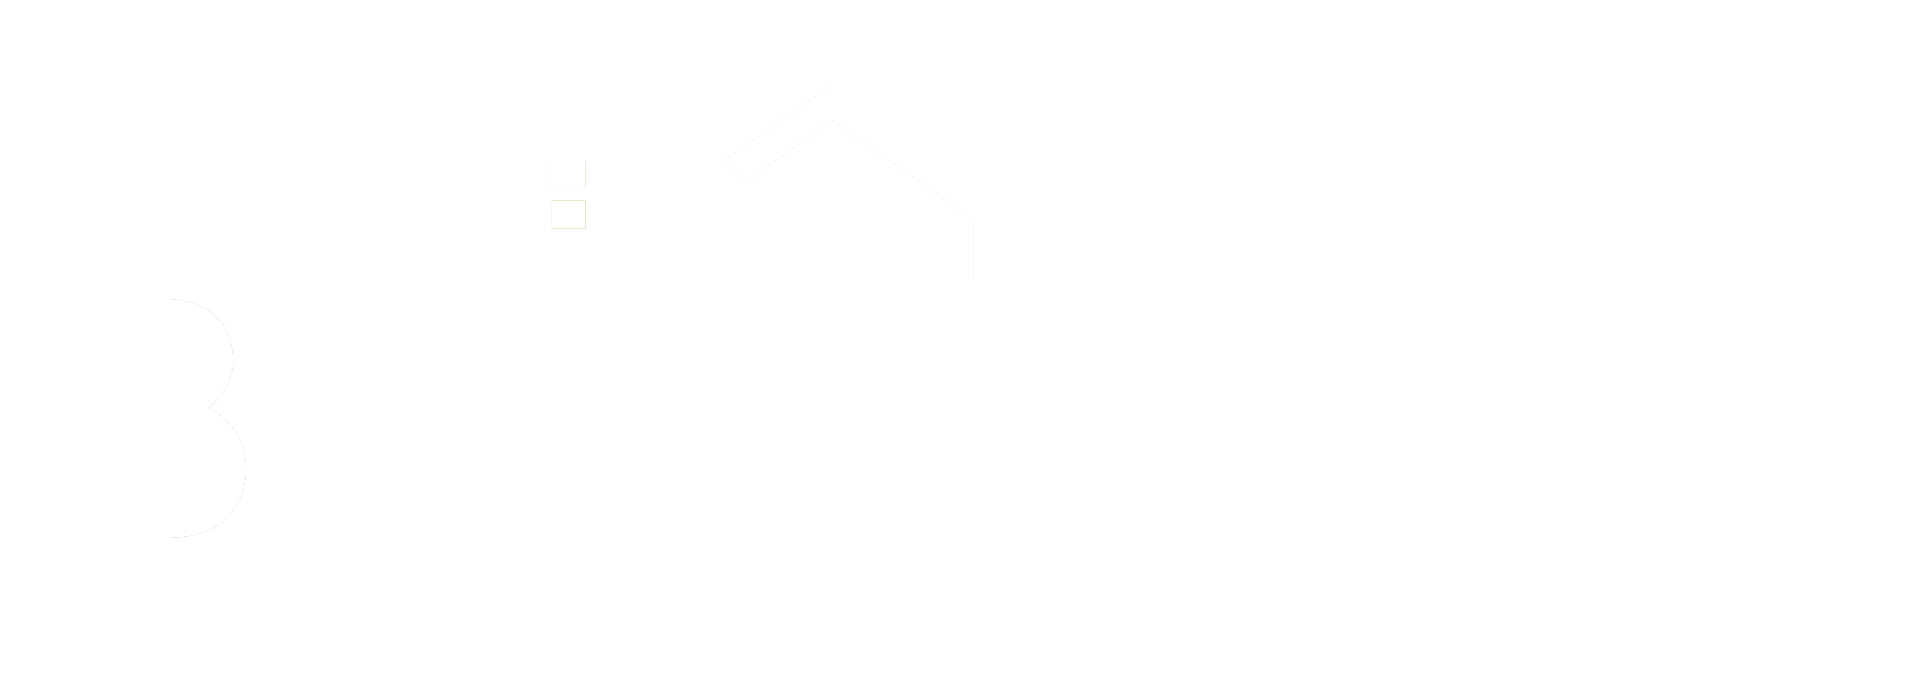 Broadacres Housing Association